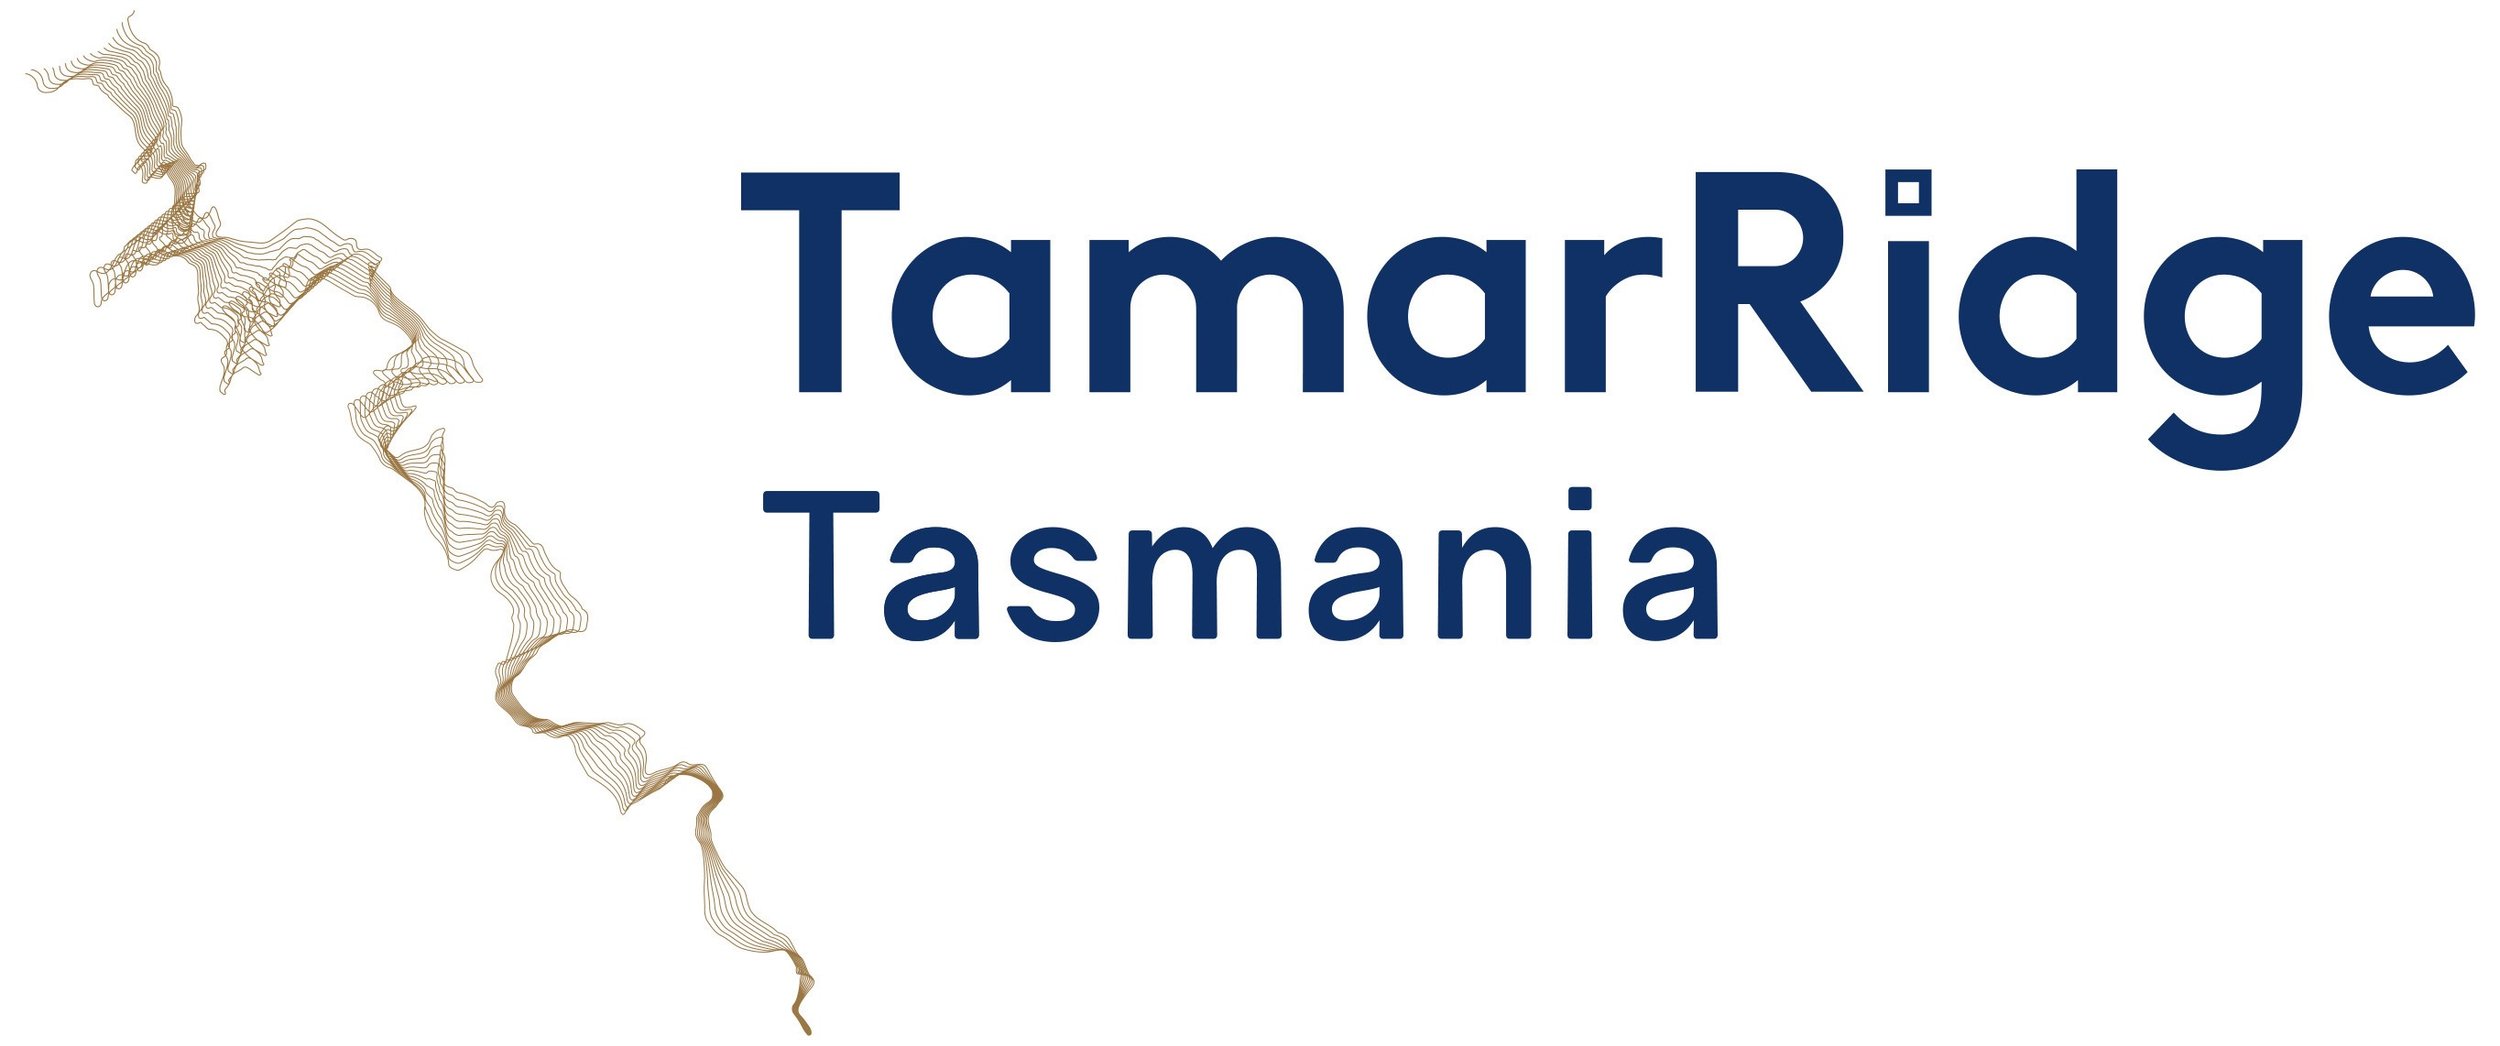 Tamar Ridge Tasmania.jpg